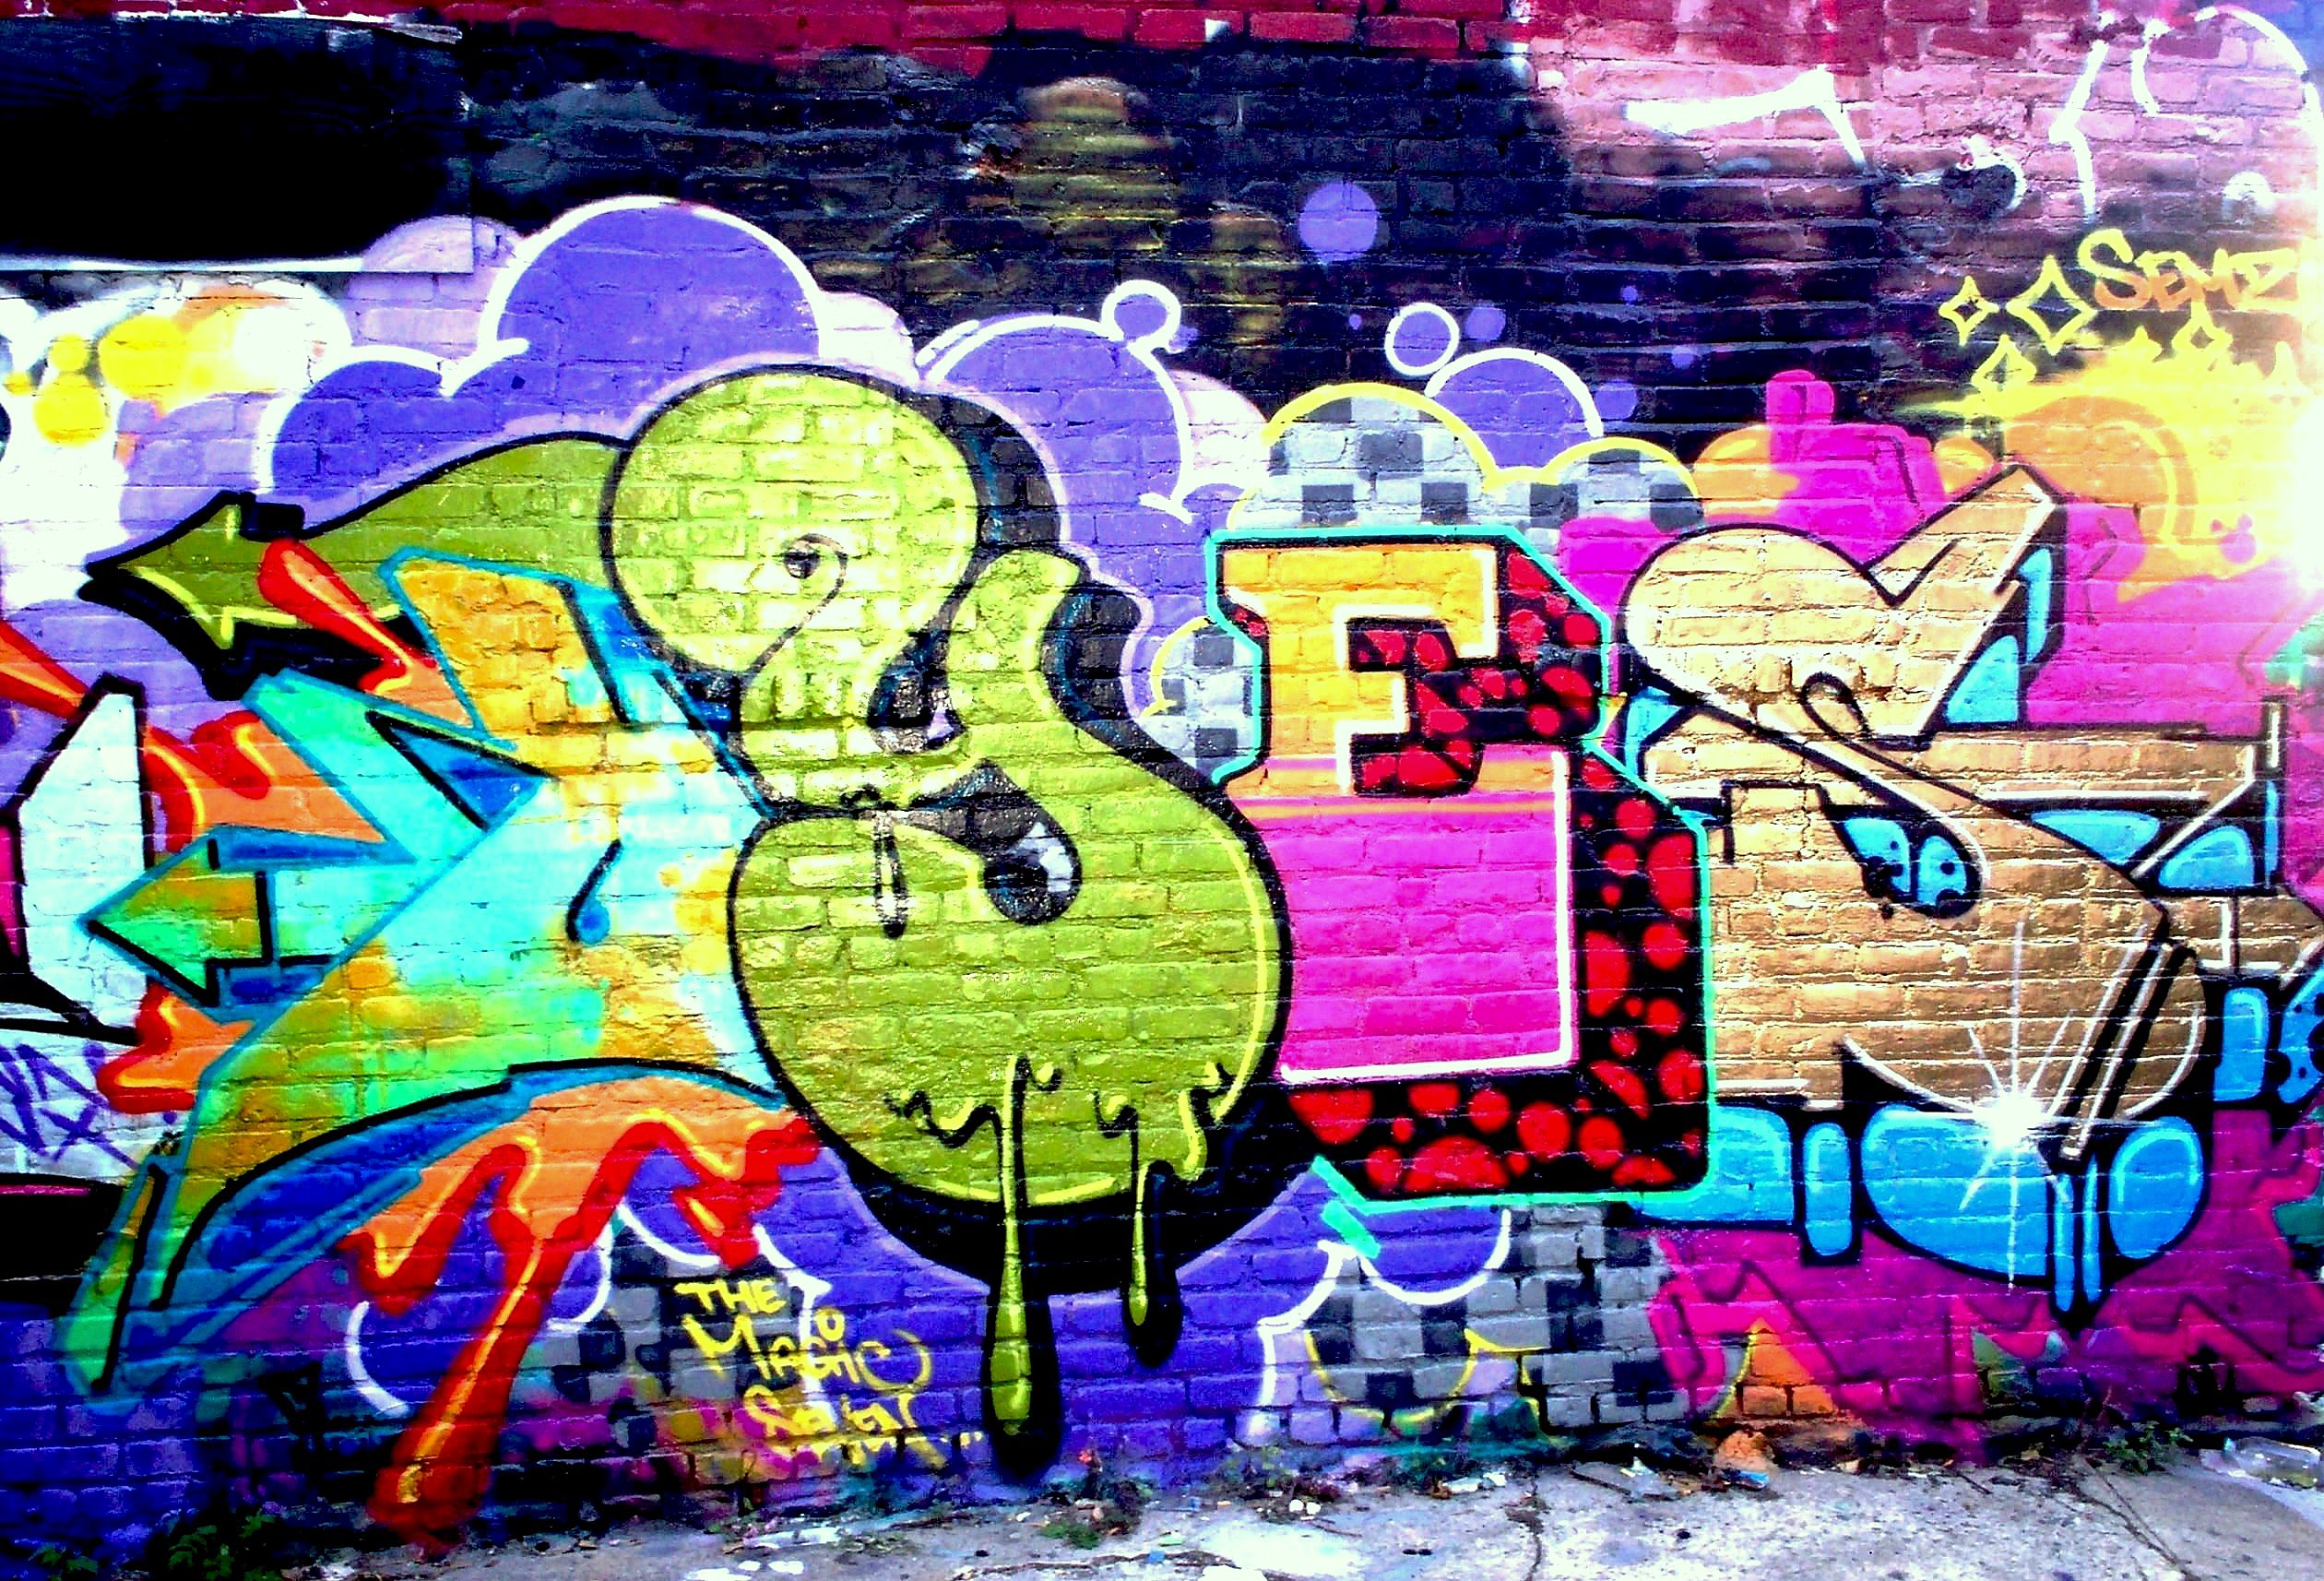 graffiti, artistic images